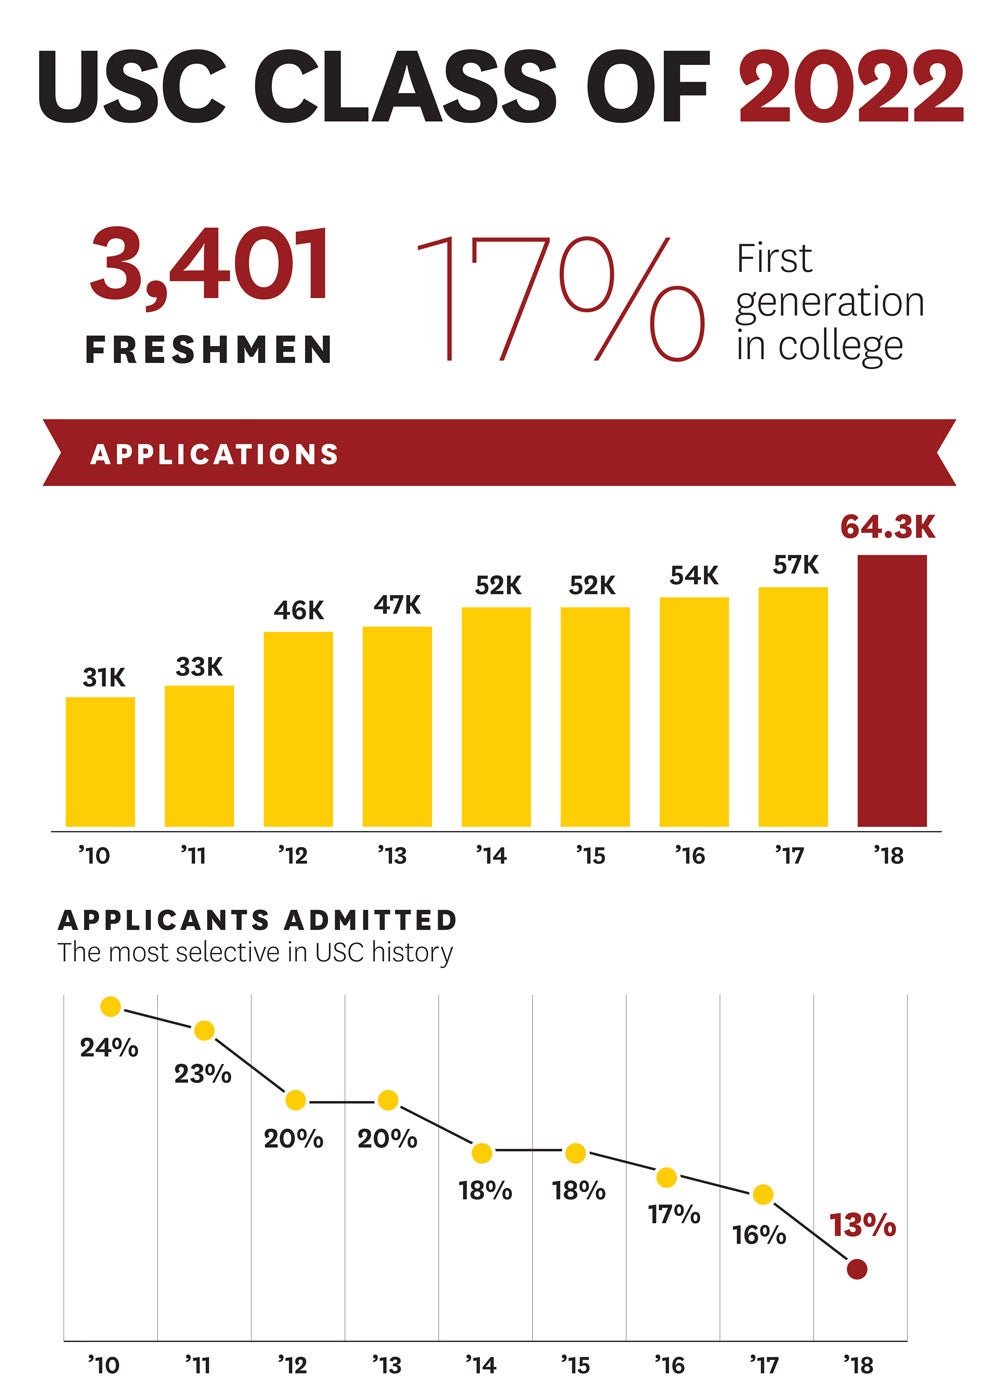 USC Class of 2022: 3,401 freshmen, 17% first generation in college